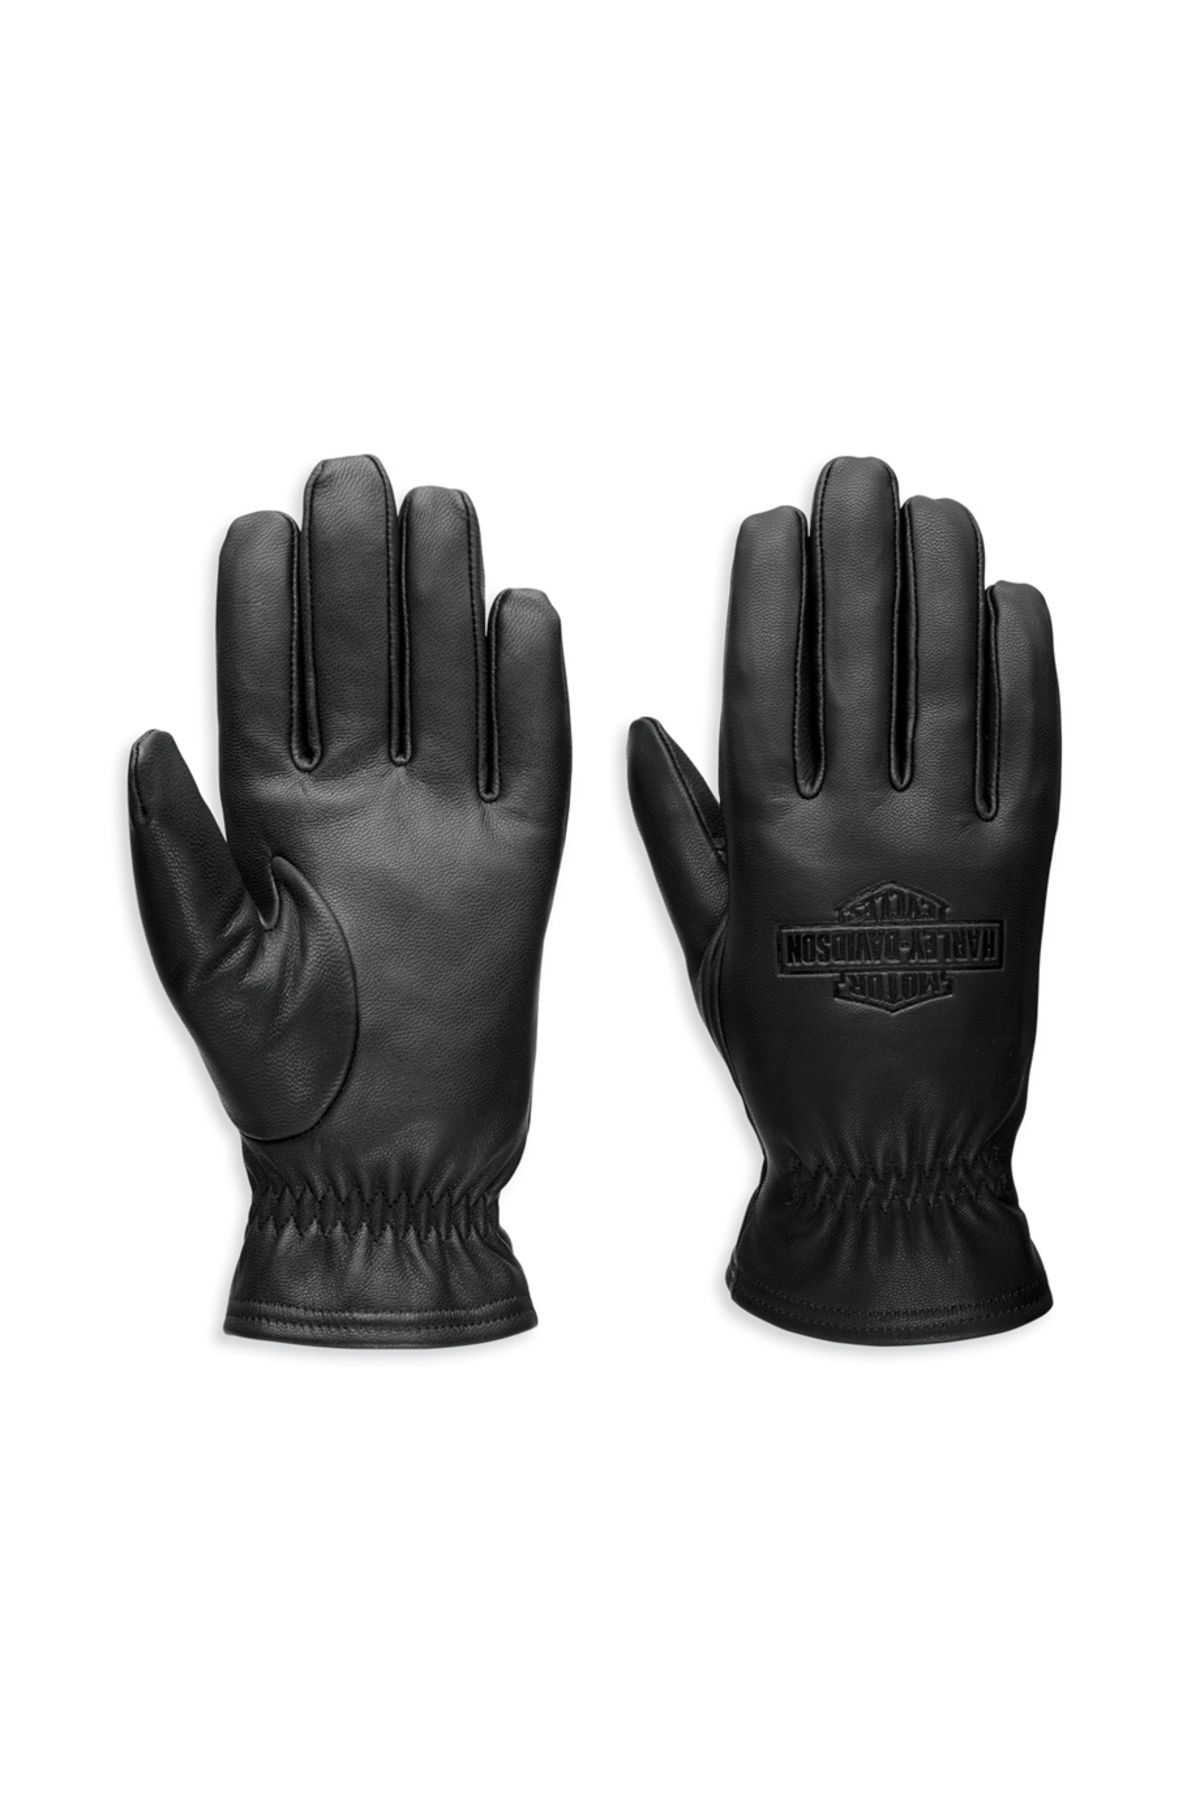 Harley Davidson Harley-davidson Men's Full Speed Leather Gloves